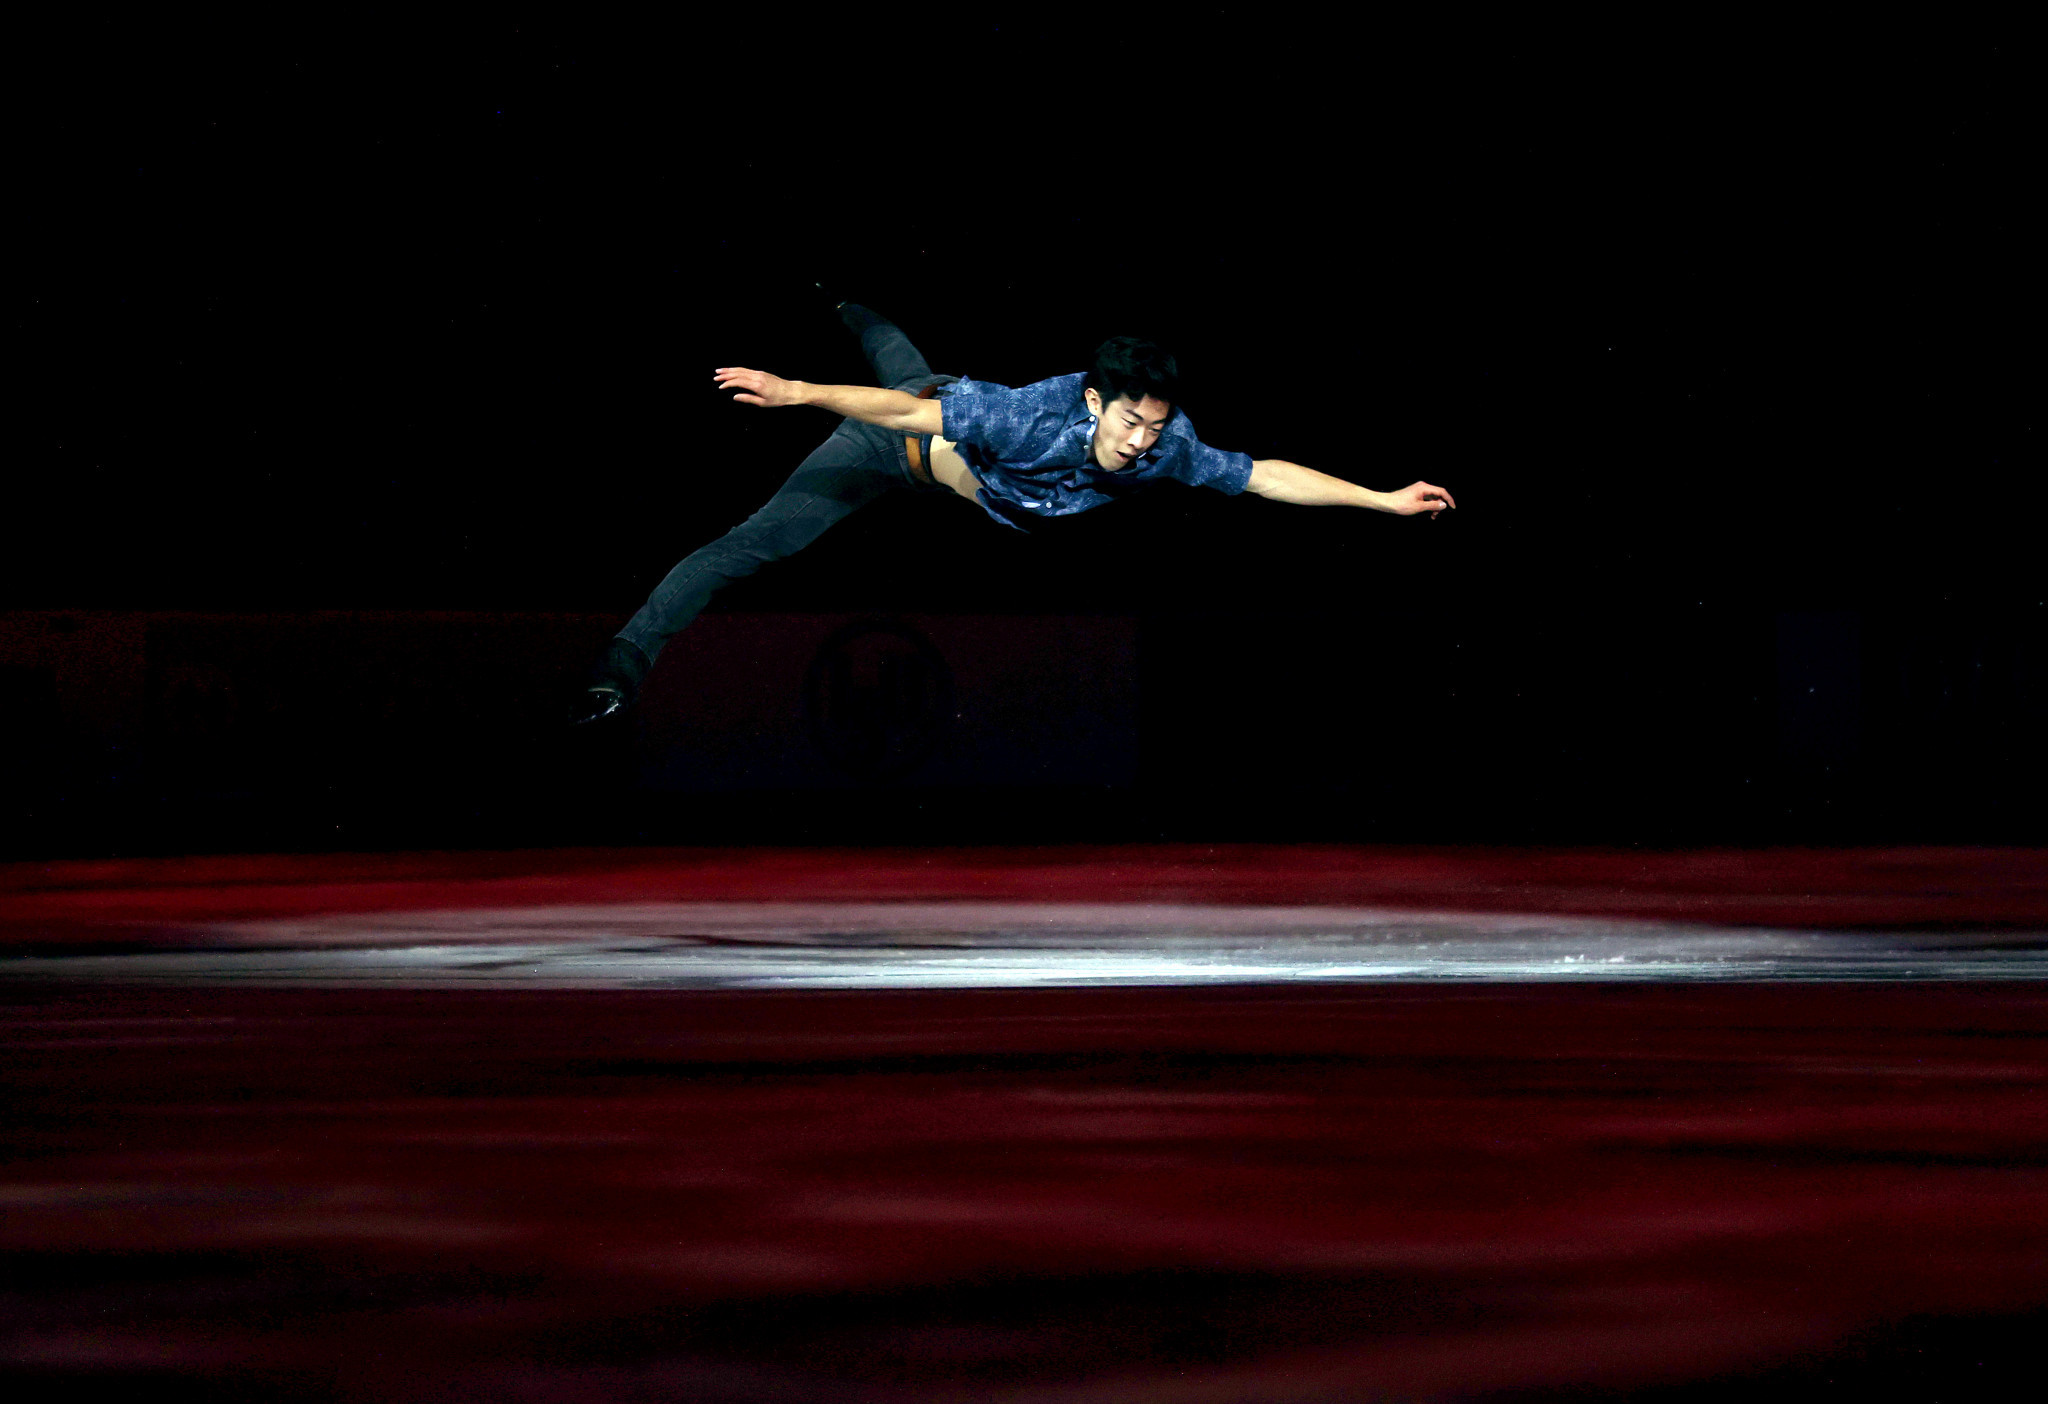 Chen set to impress at Skate Canada International as Grand Prix of Figure Skating resumes